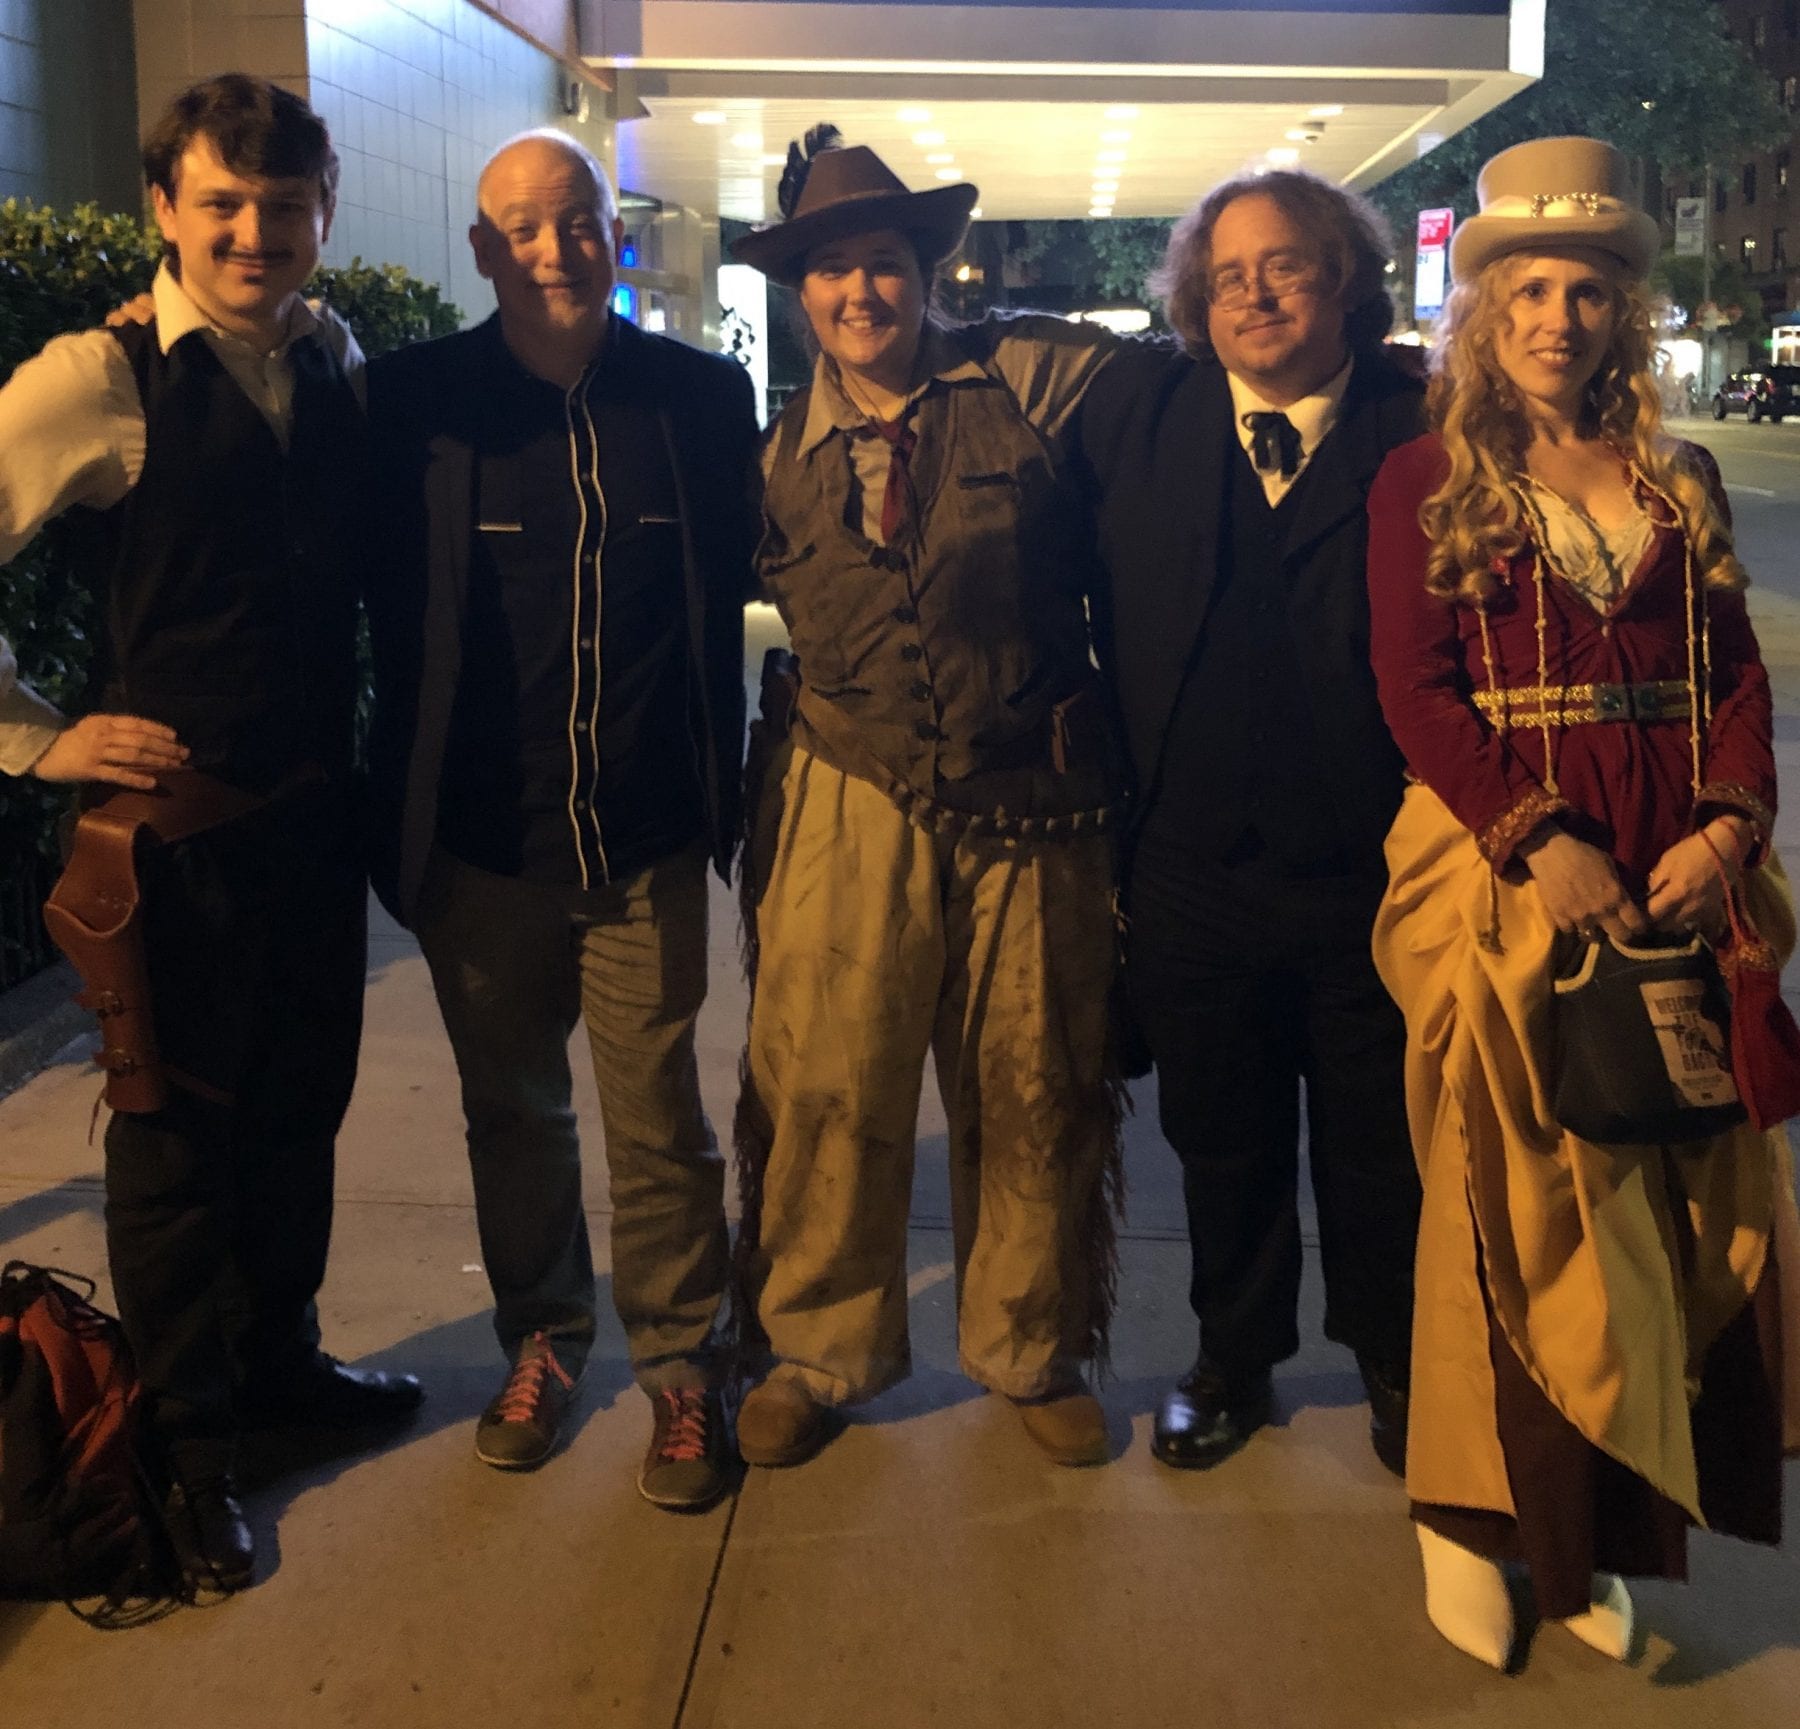 Matt Zoller Seitz, and some Deadwood cosplayers